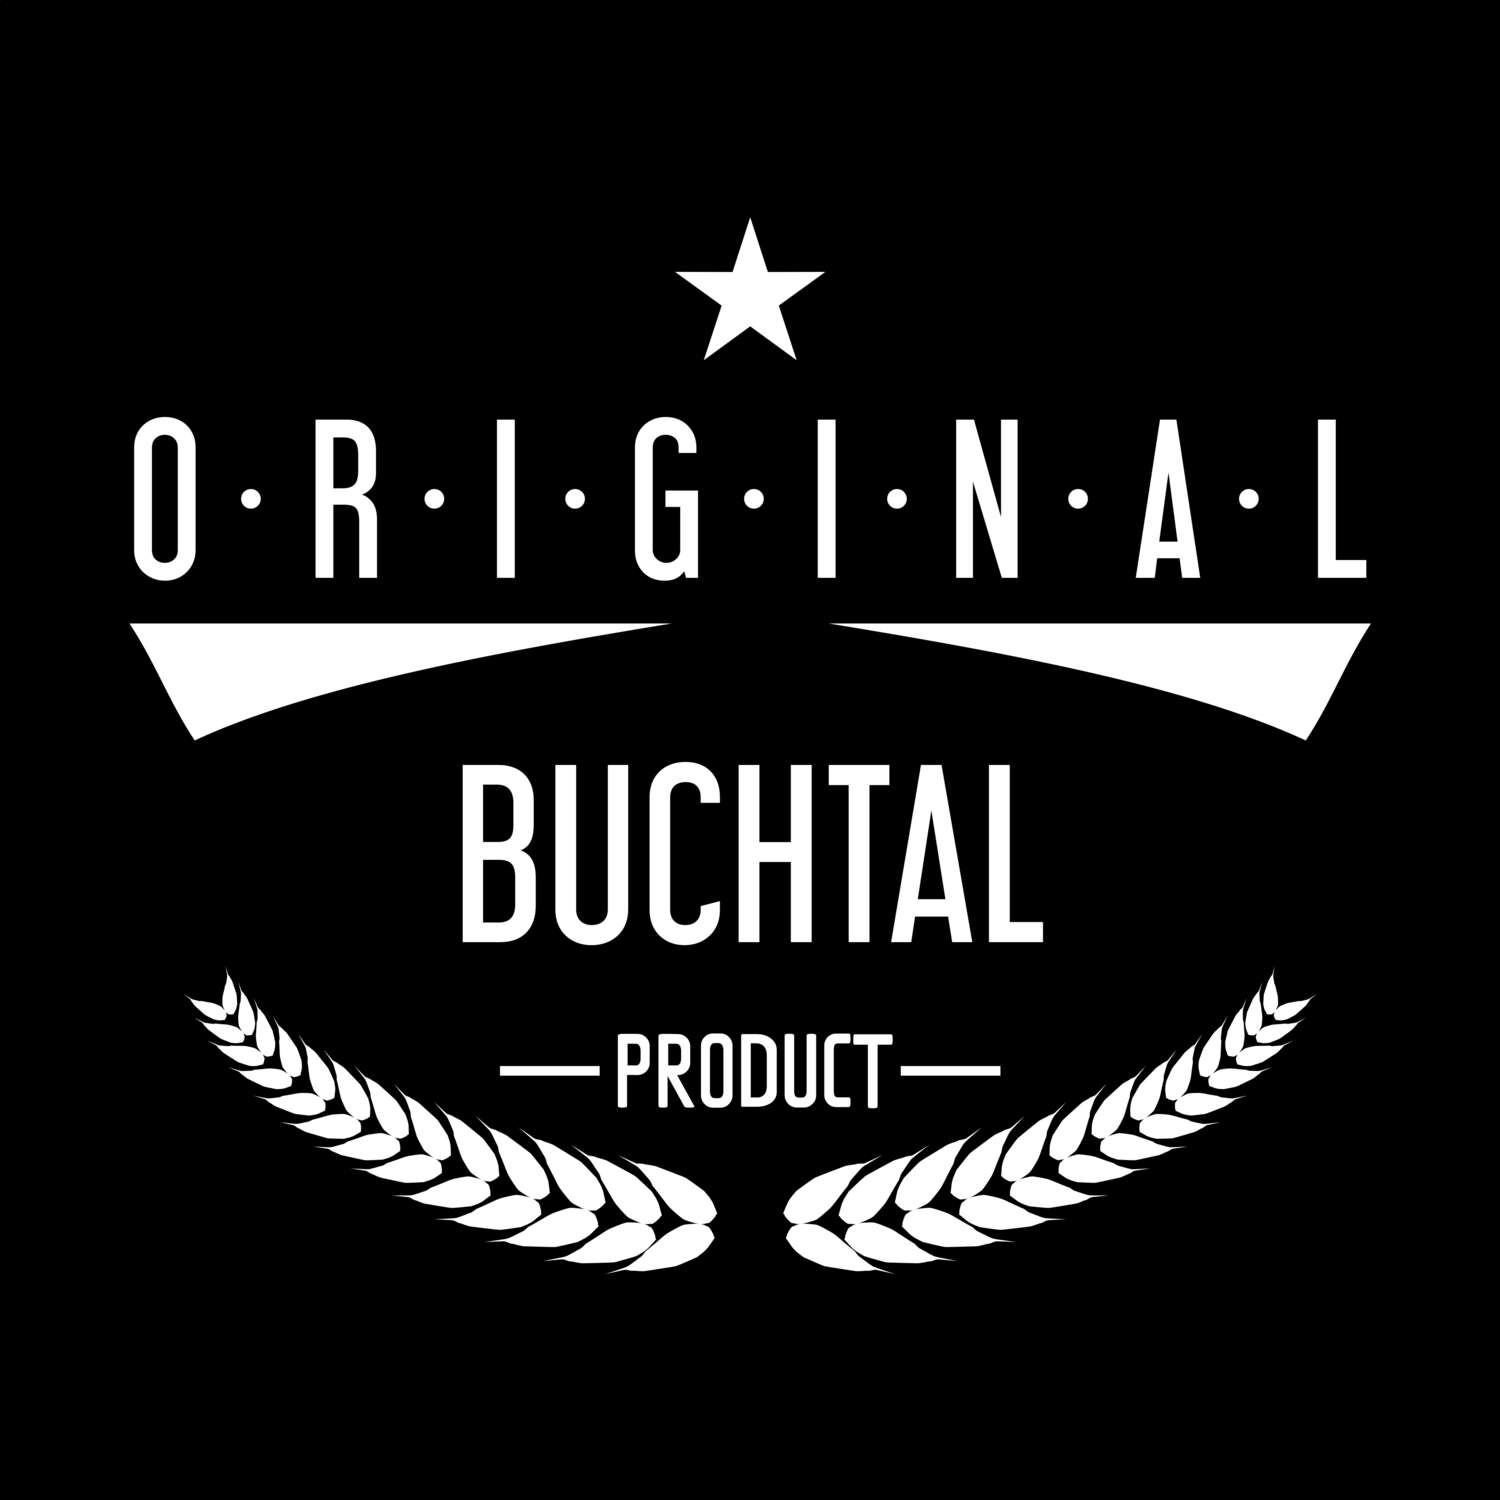 Buchtal T-Shirt »Original Product«